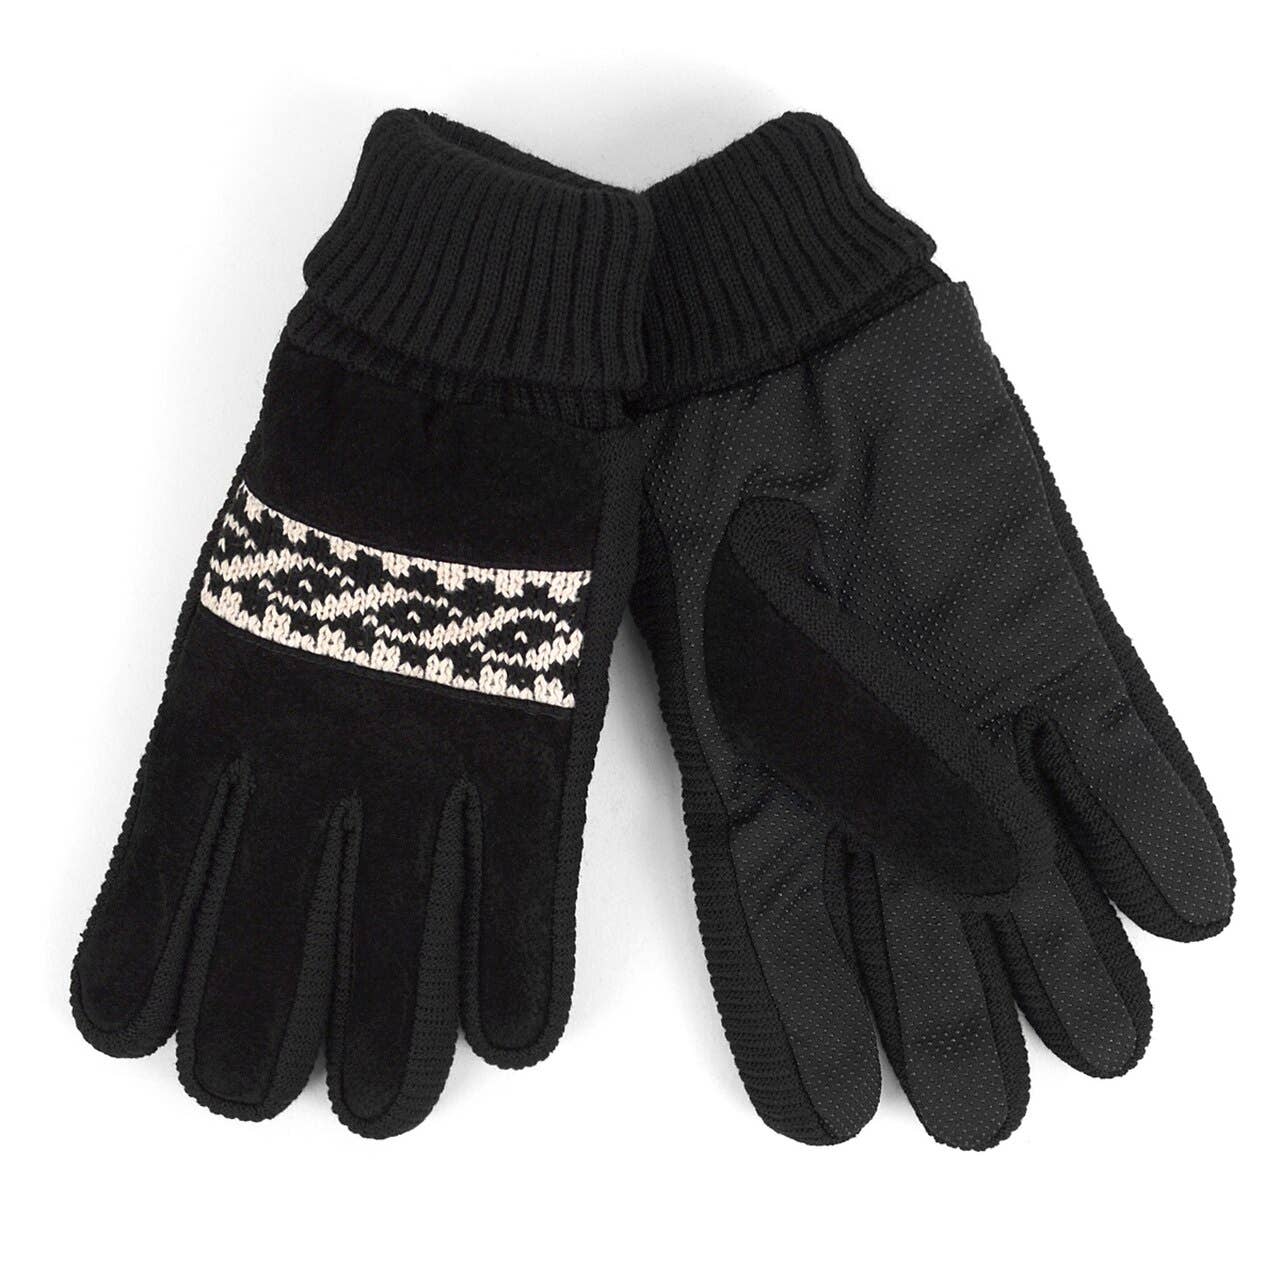 Men's Genuine Leather Non Slip Grip Winter Gloves: Black / S/M